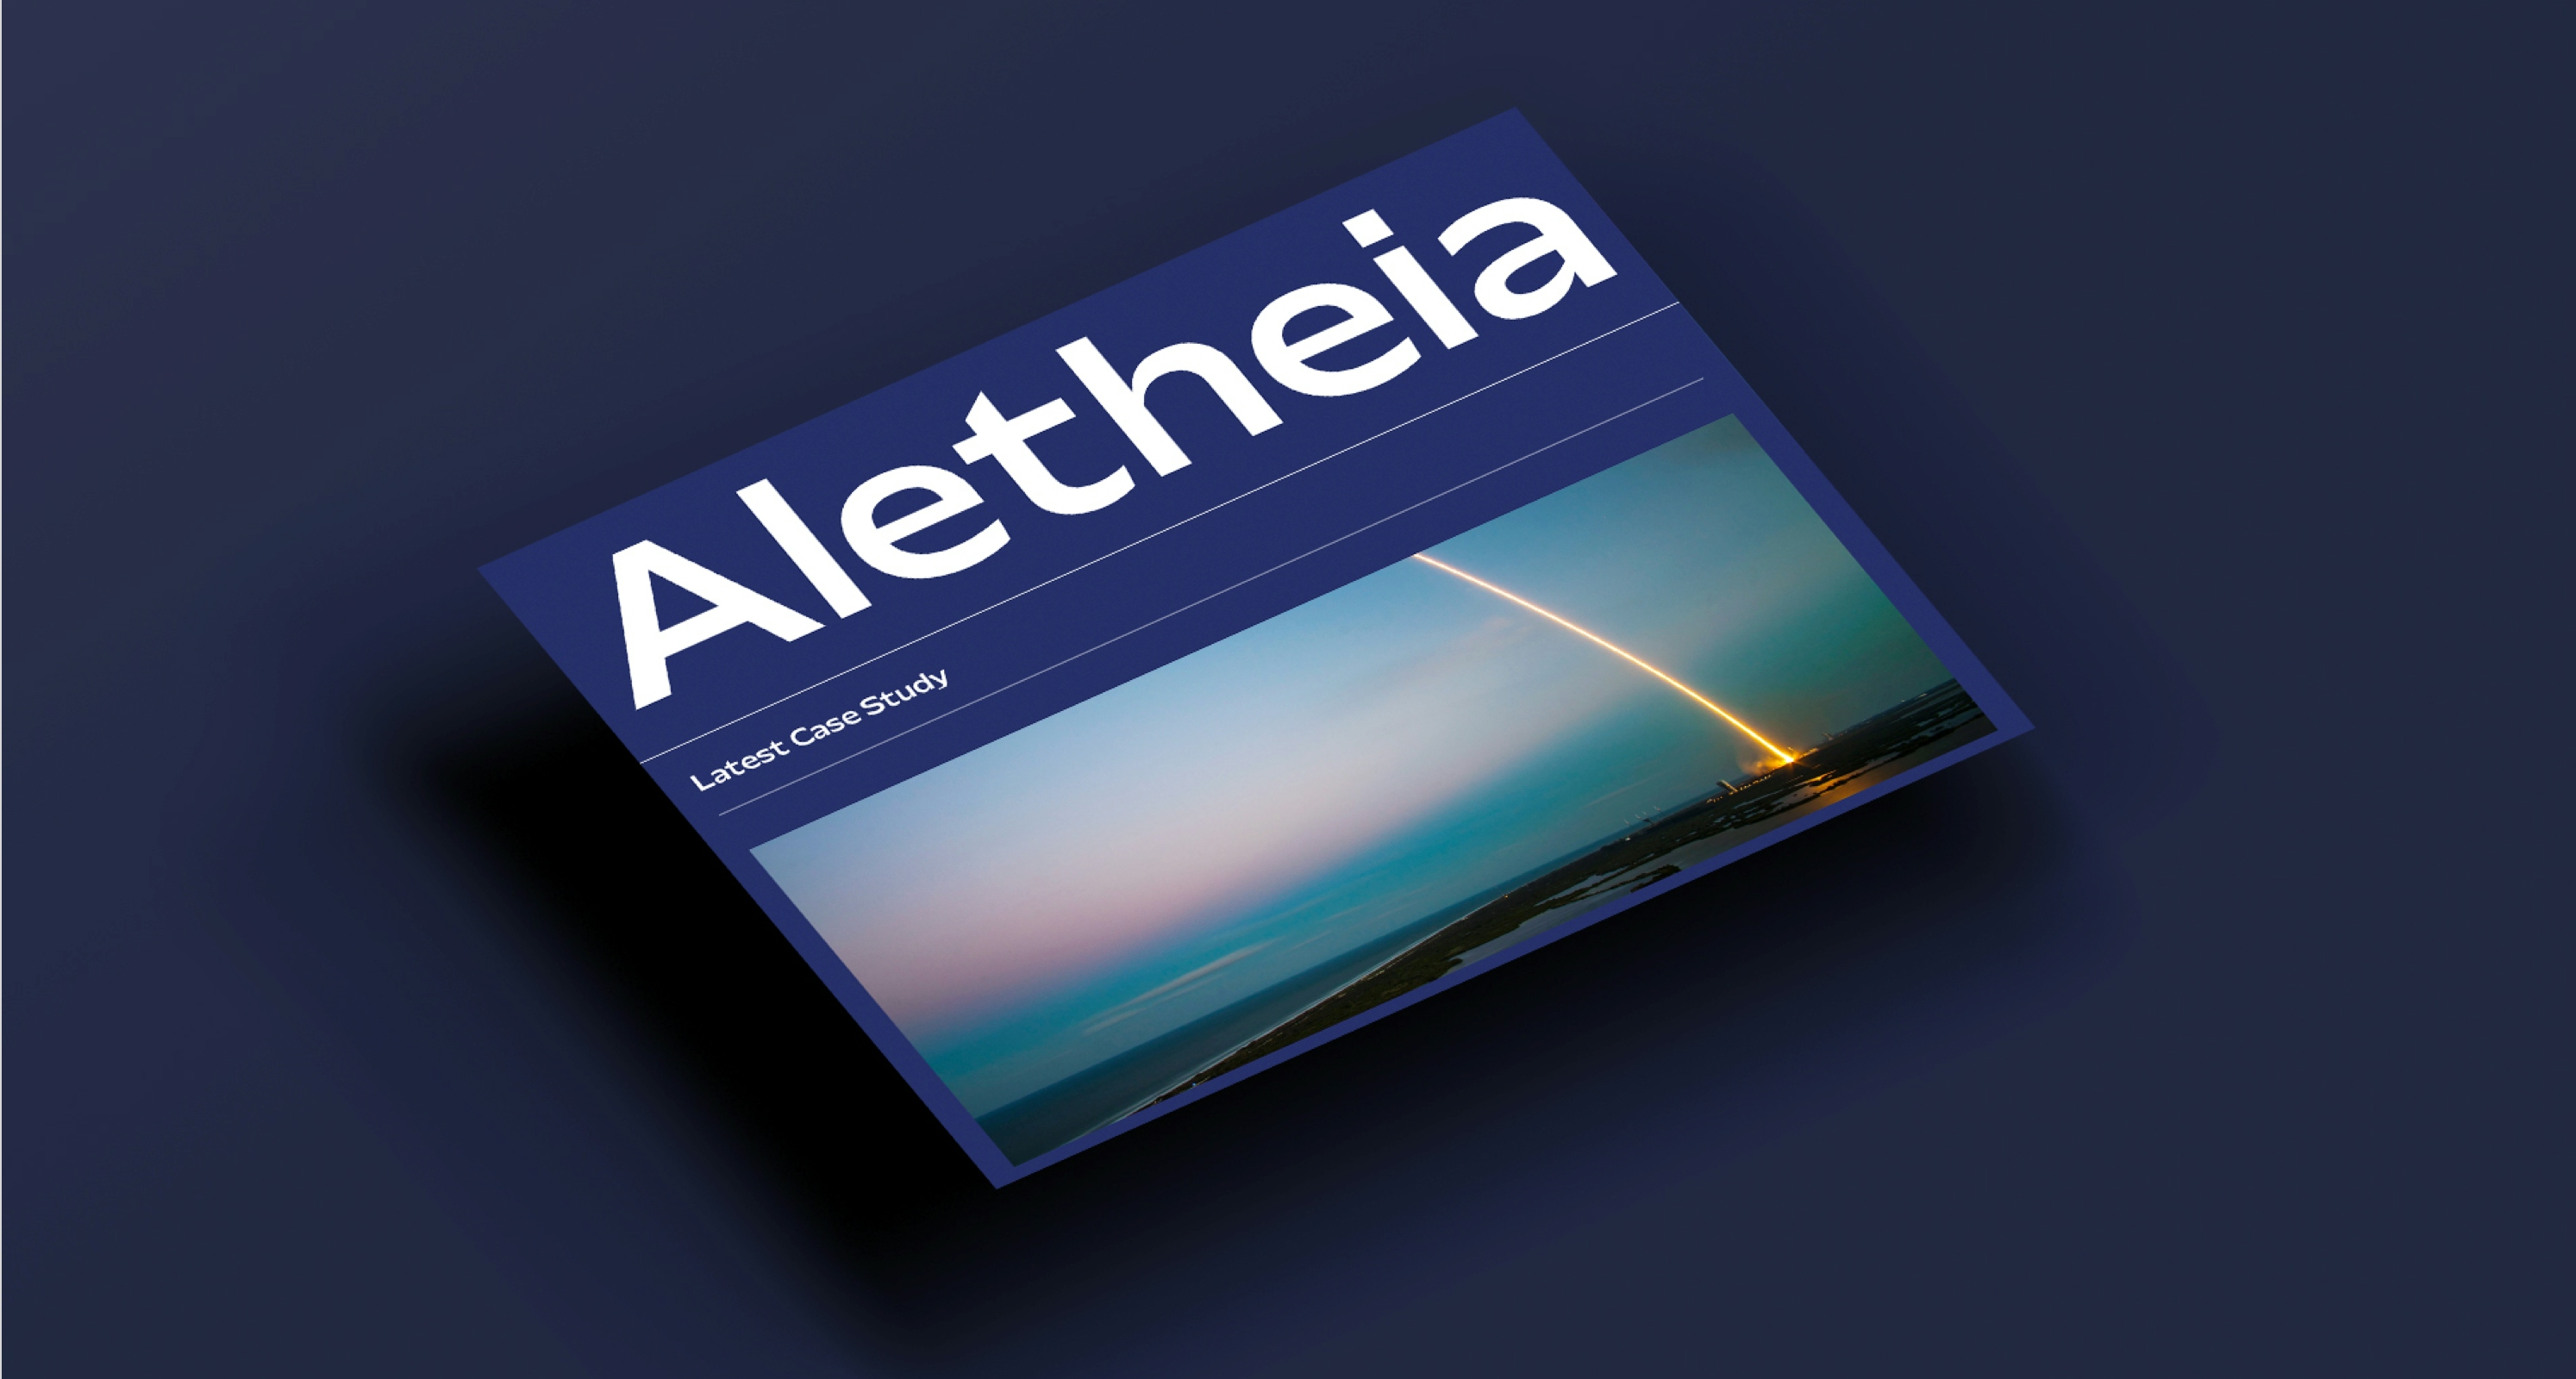 An “Alethia latest case study” block sits diagonally on a navy background.